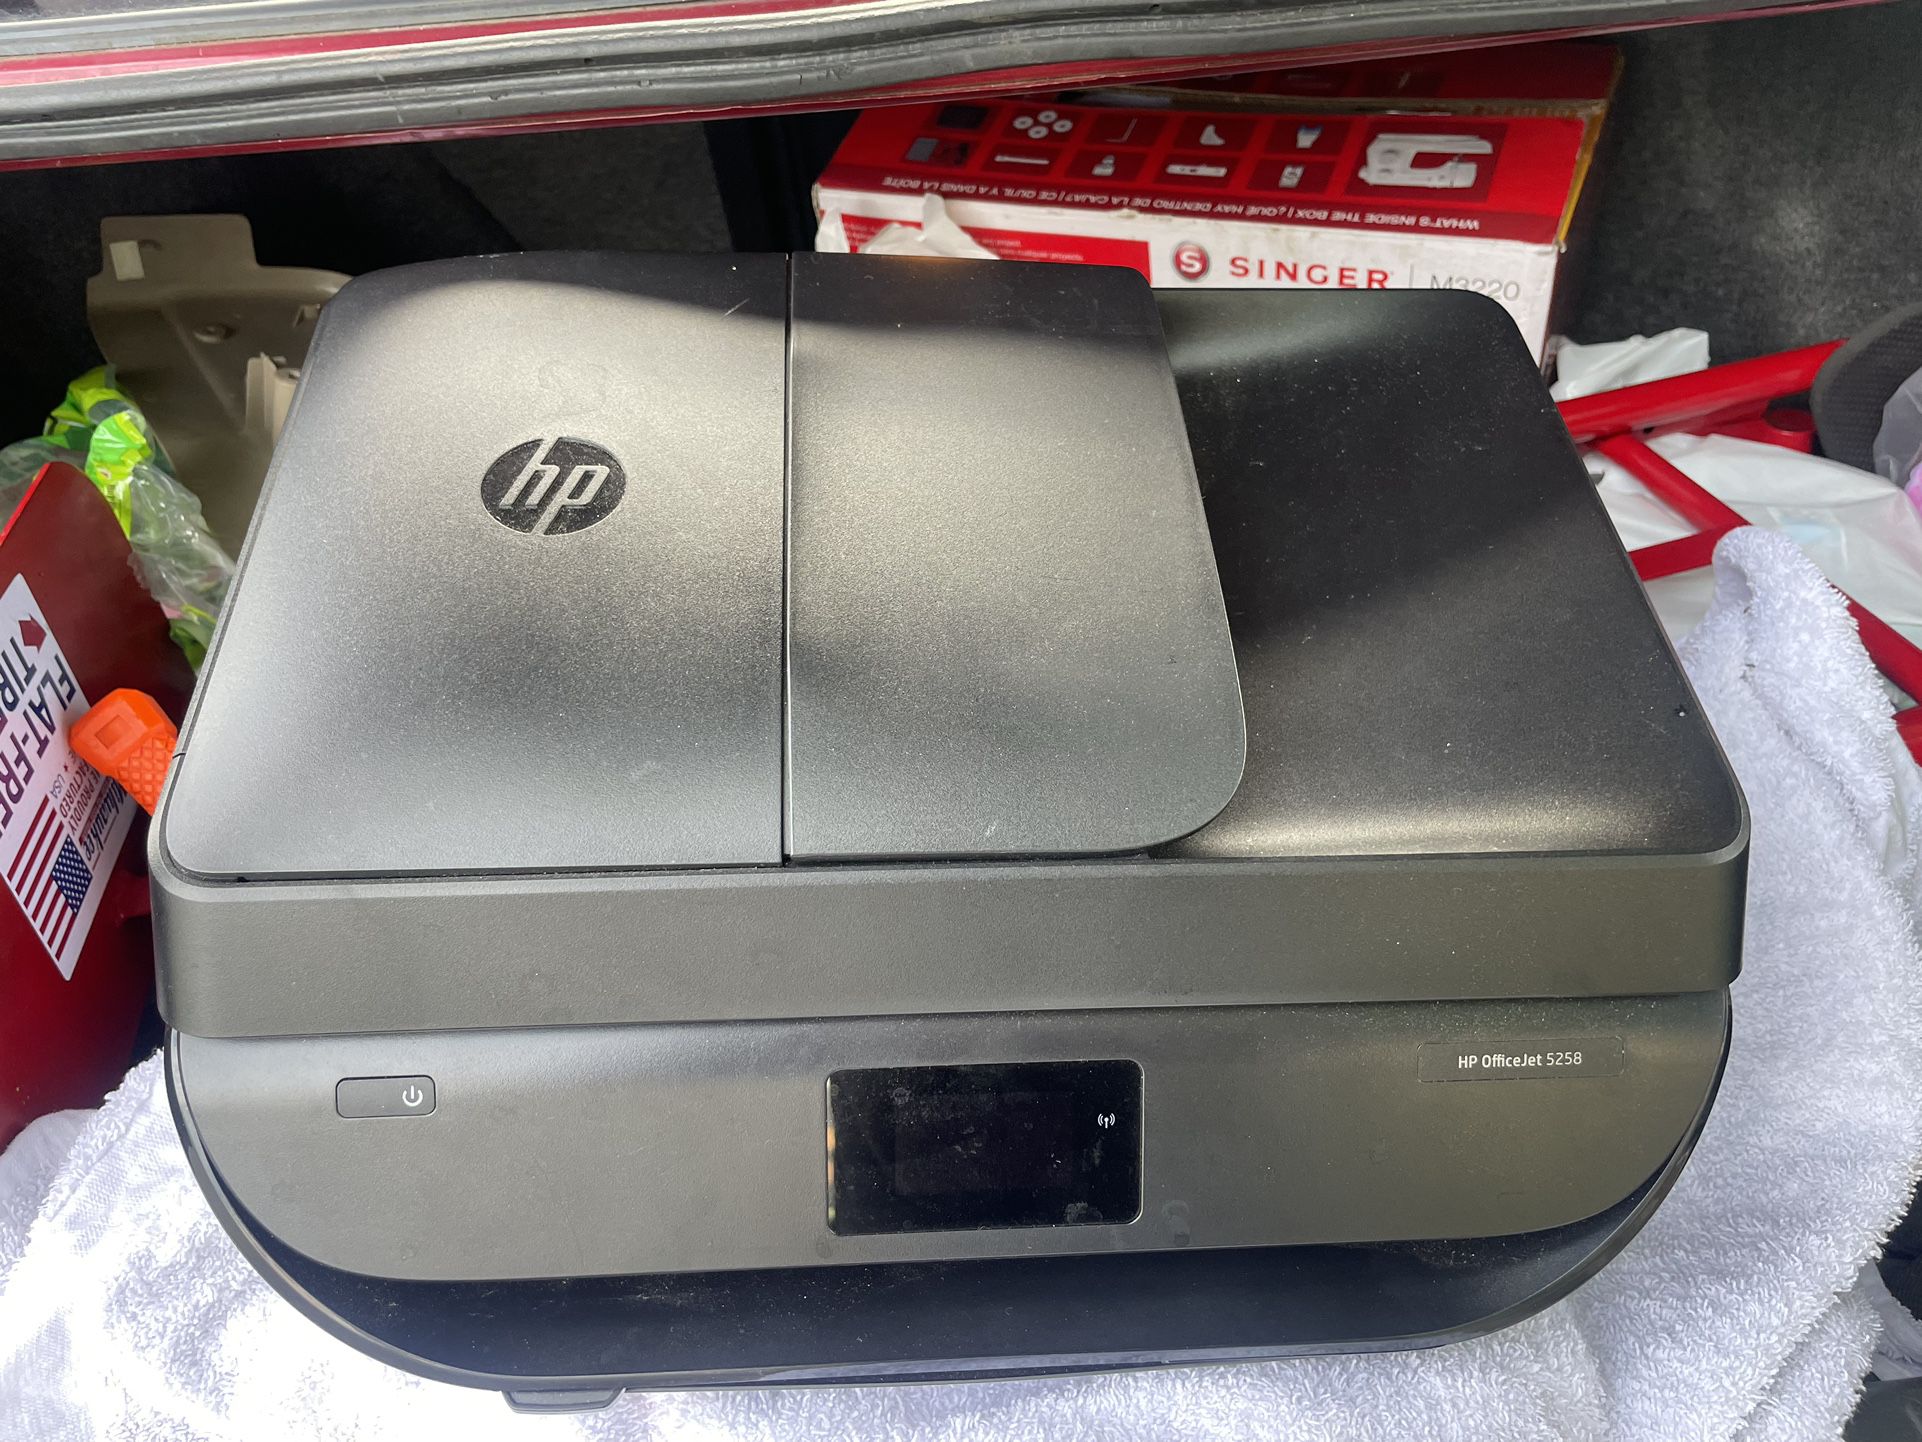 Printer HP Office Jet 5258